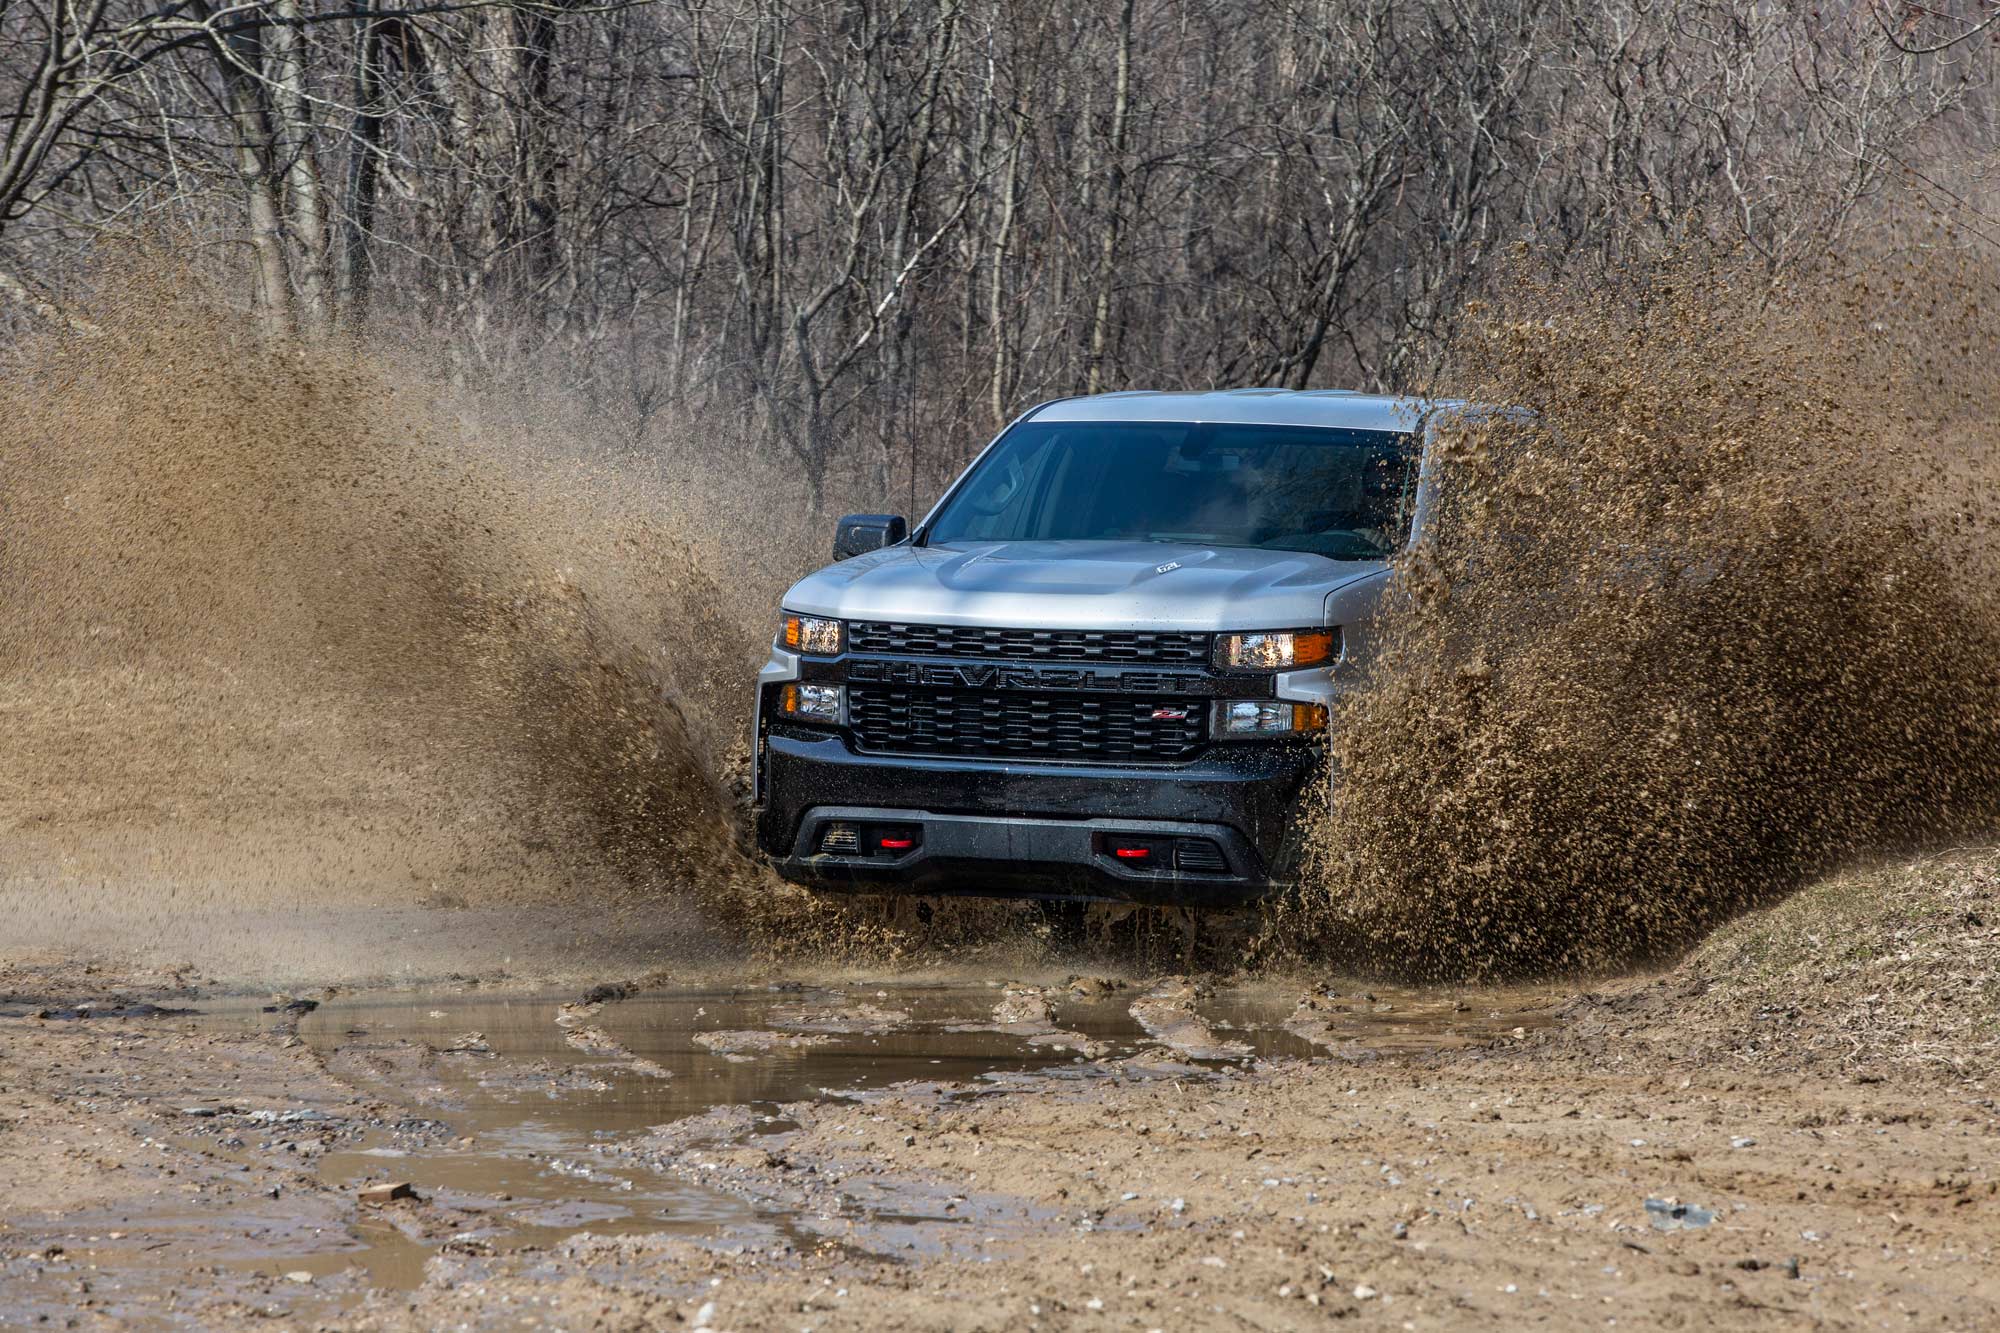 2020 Chevrolet SIlverado Trail Boss driving through deep mud.